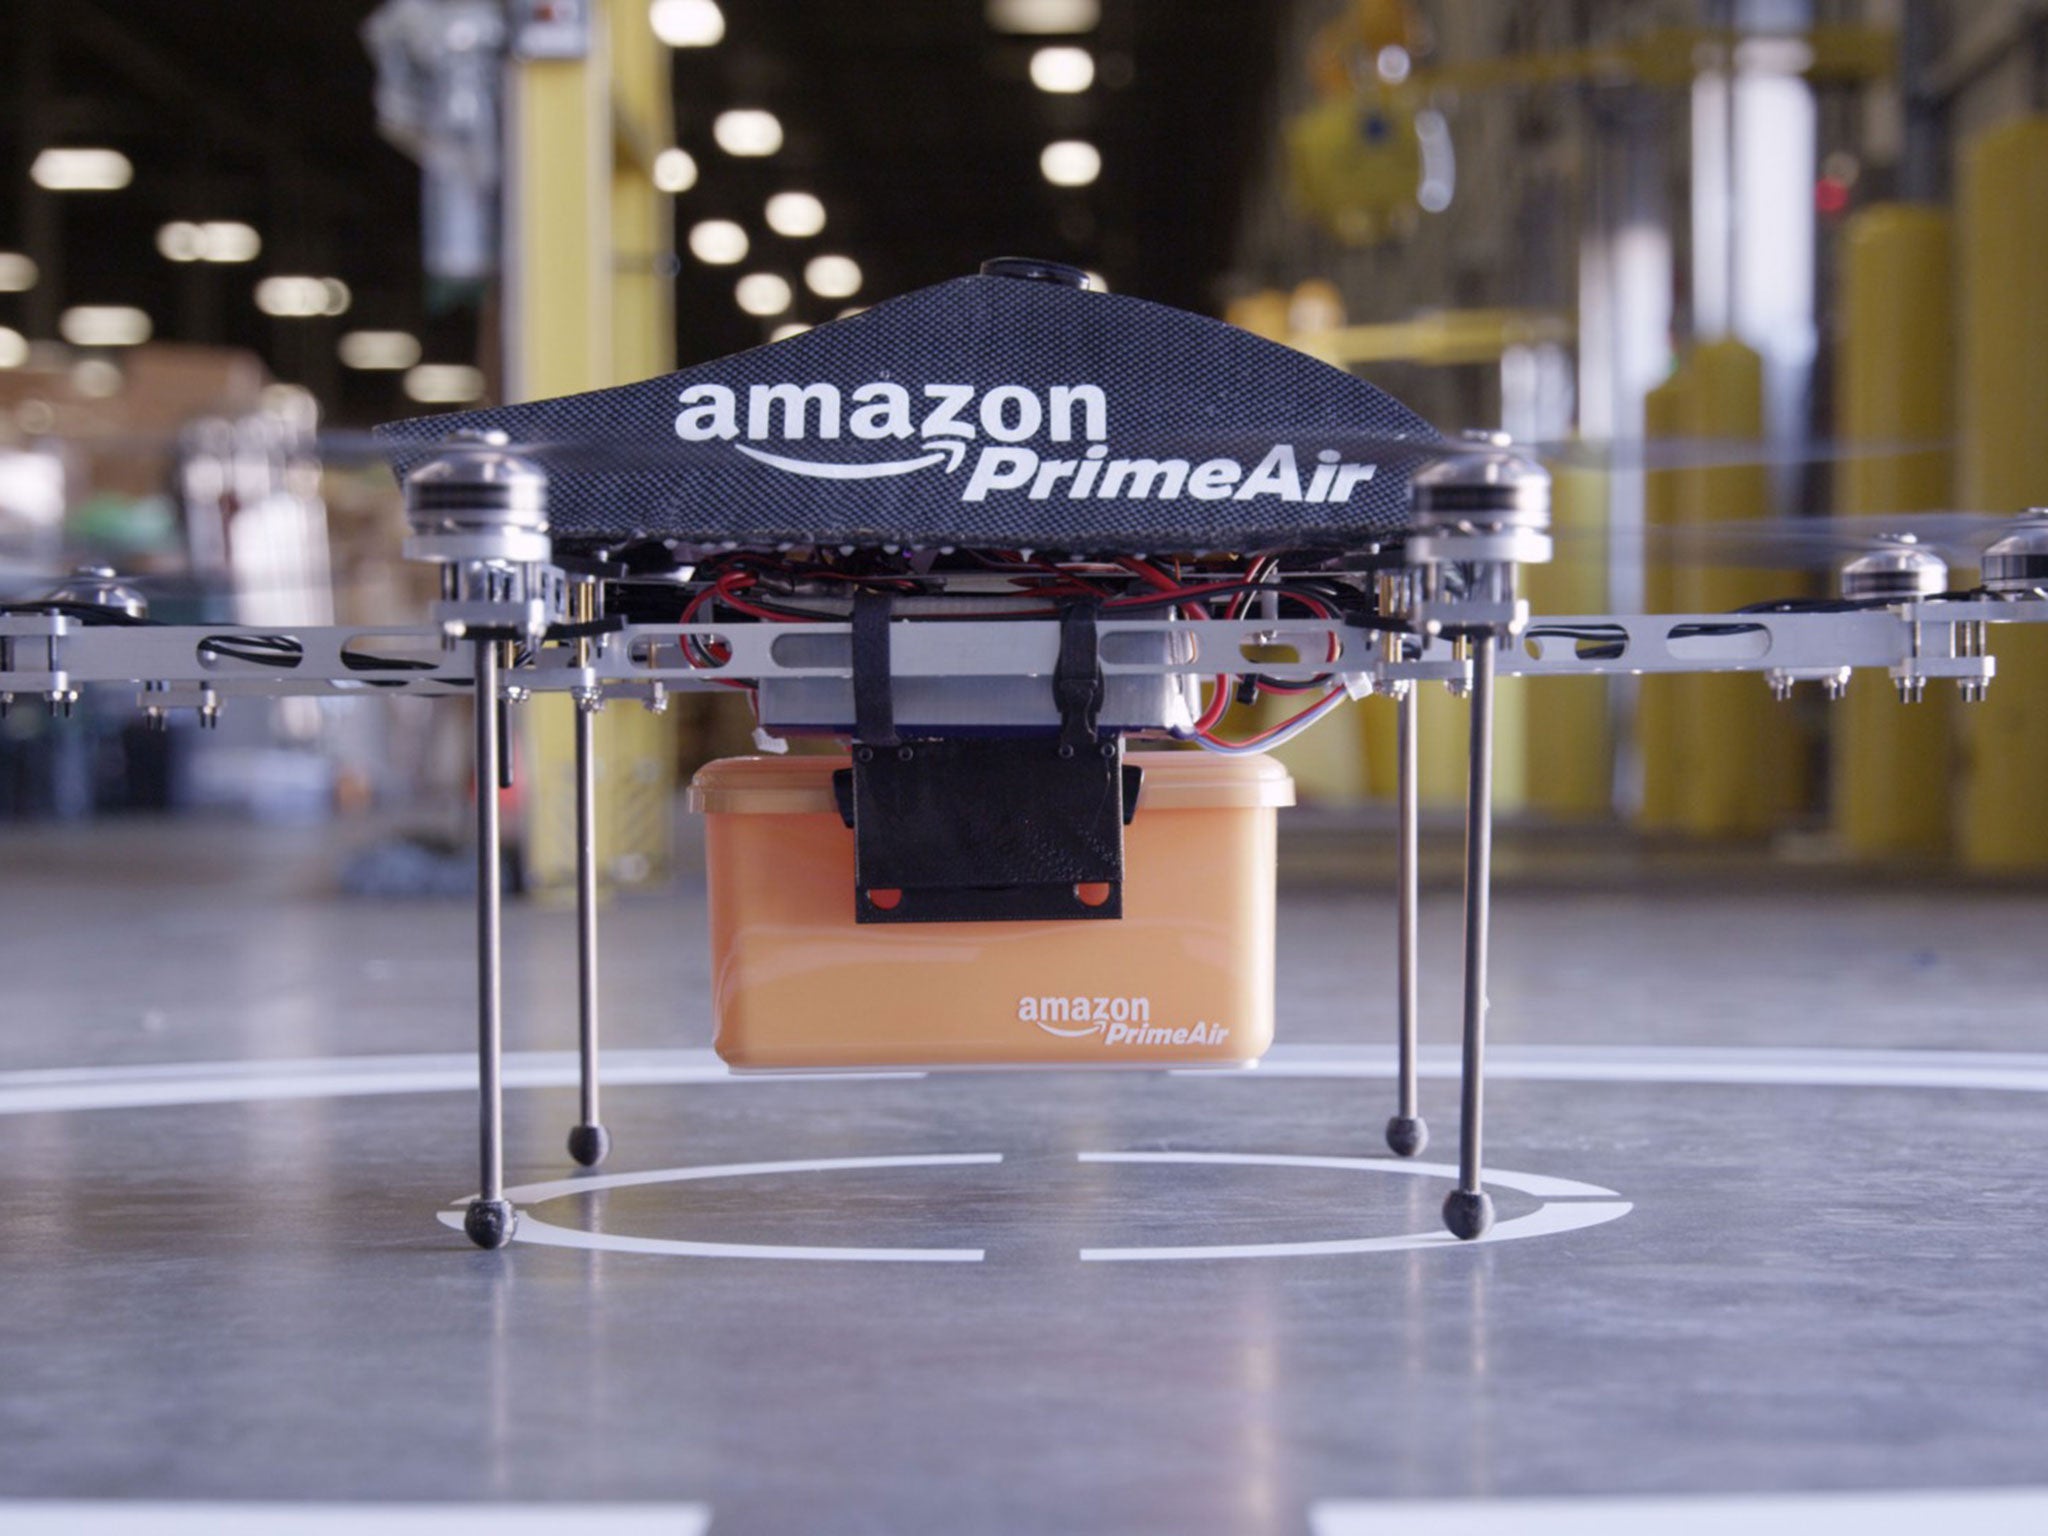 Amazon's PrimeAir drone